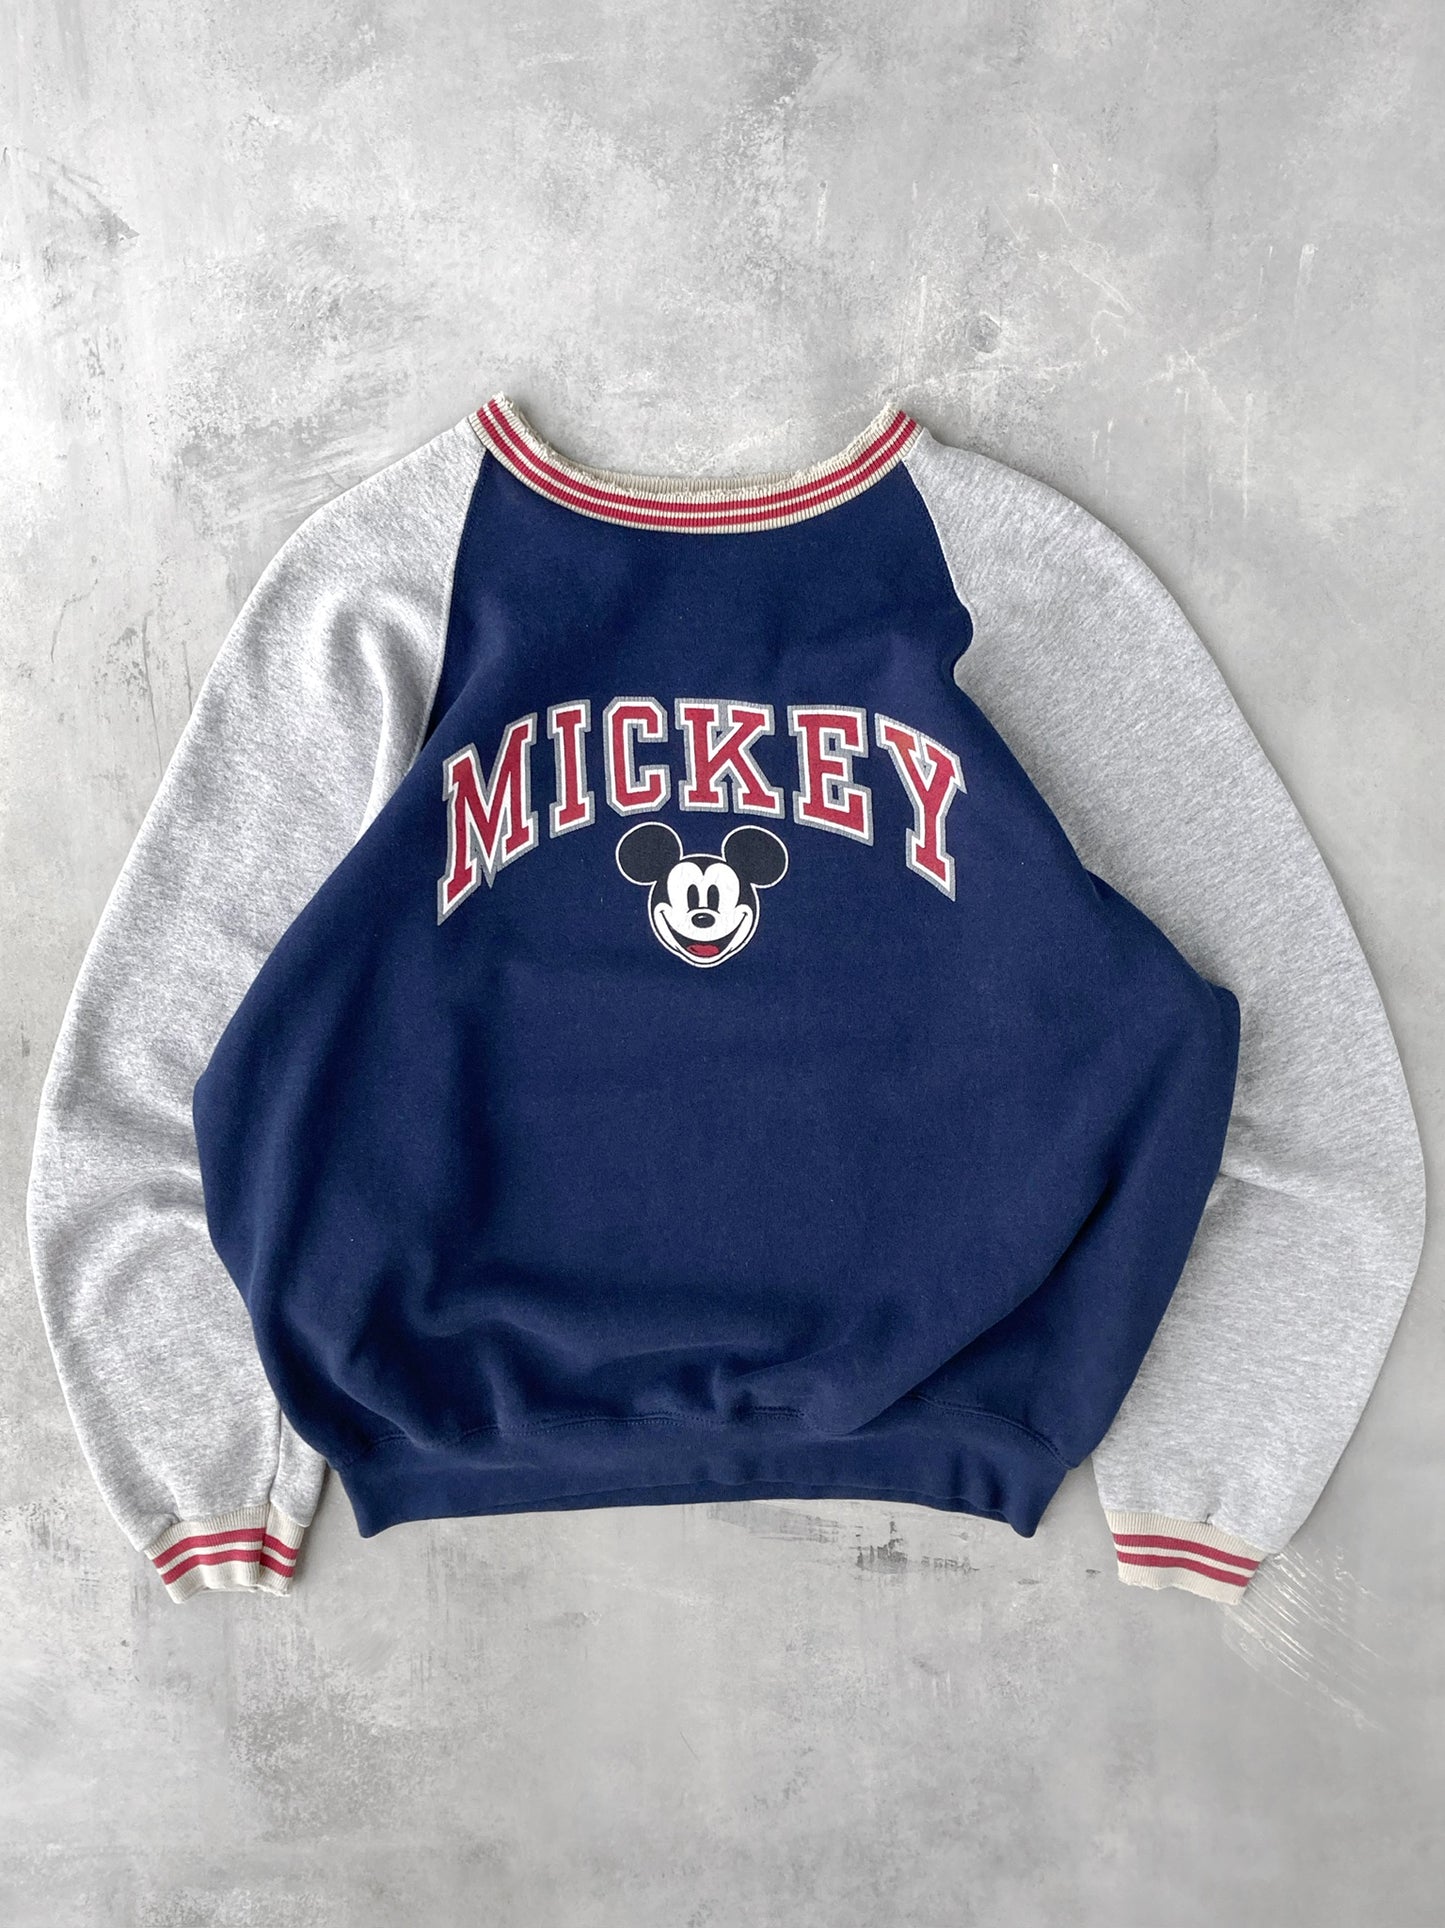 Mickey Sweatshirt 90's - XL